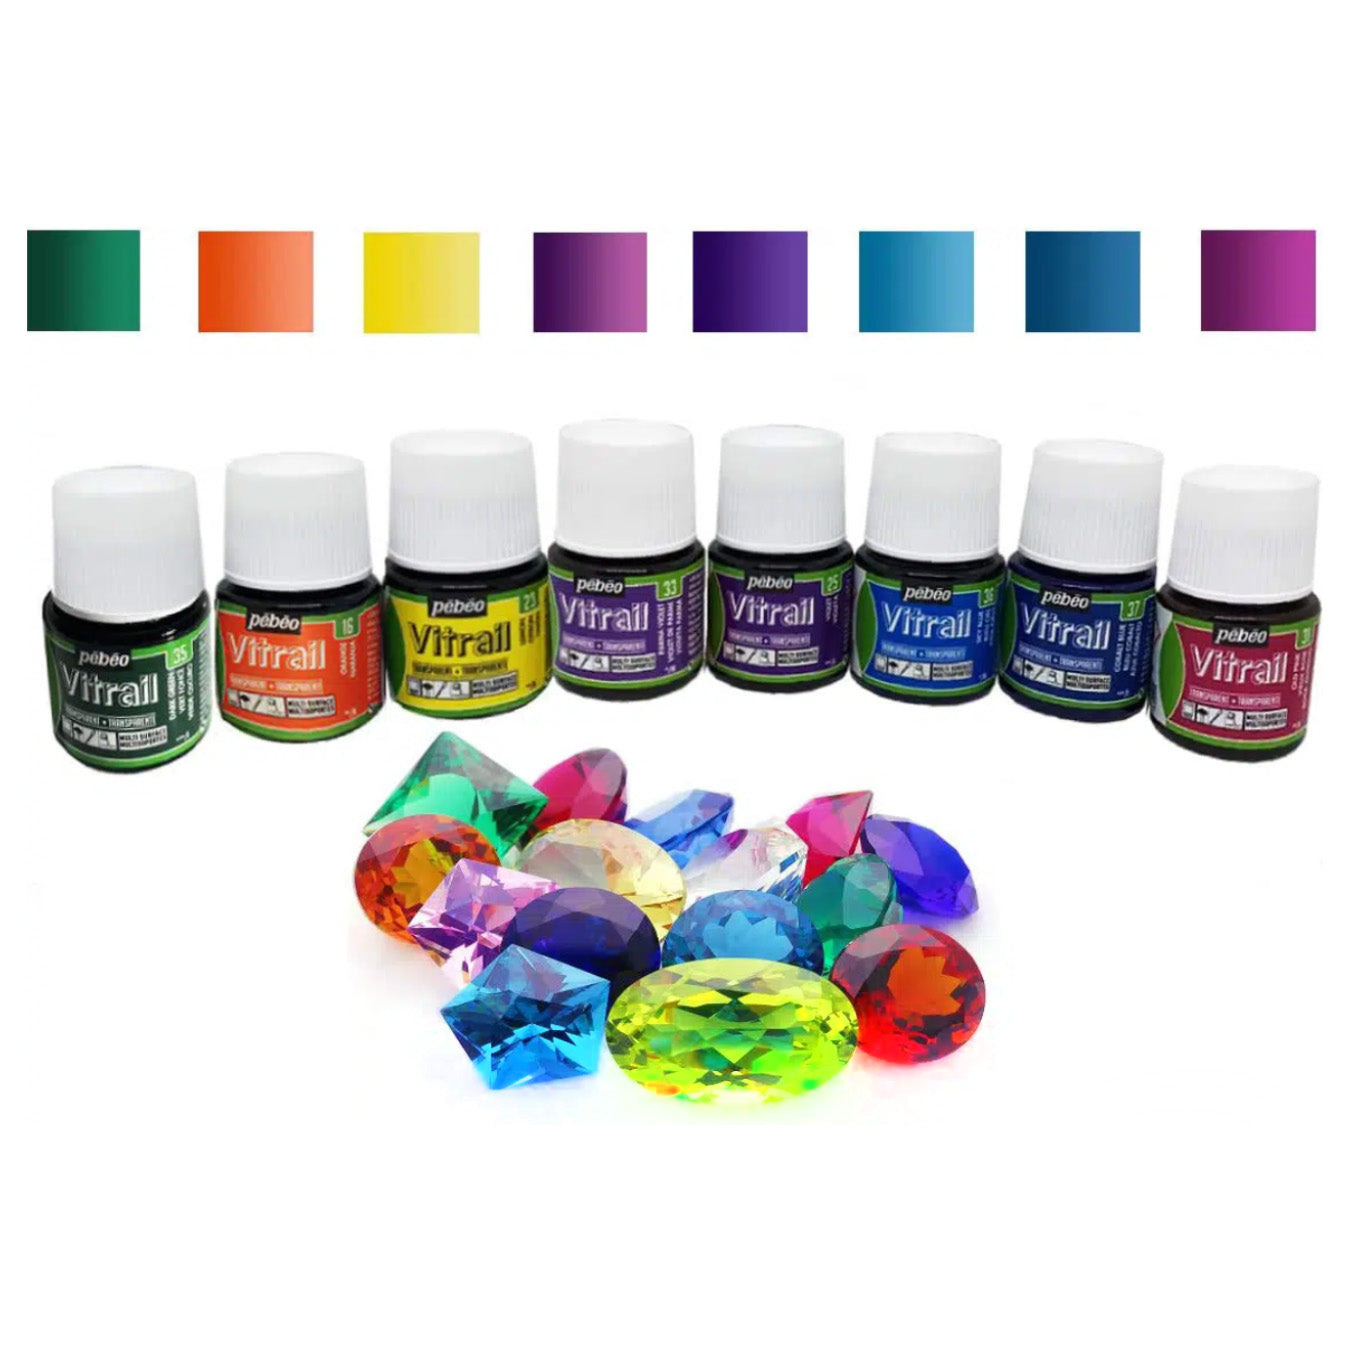 VITRAL - Transparent dye - Coral